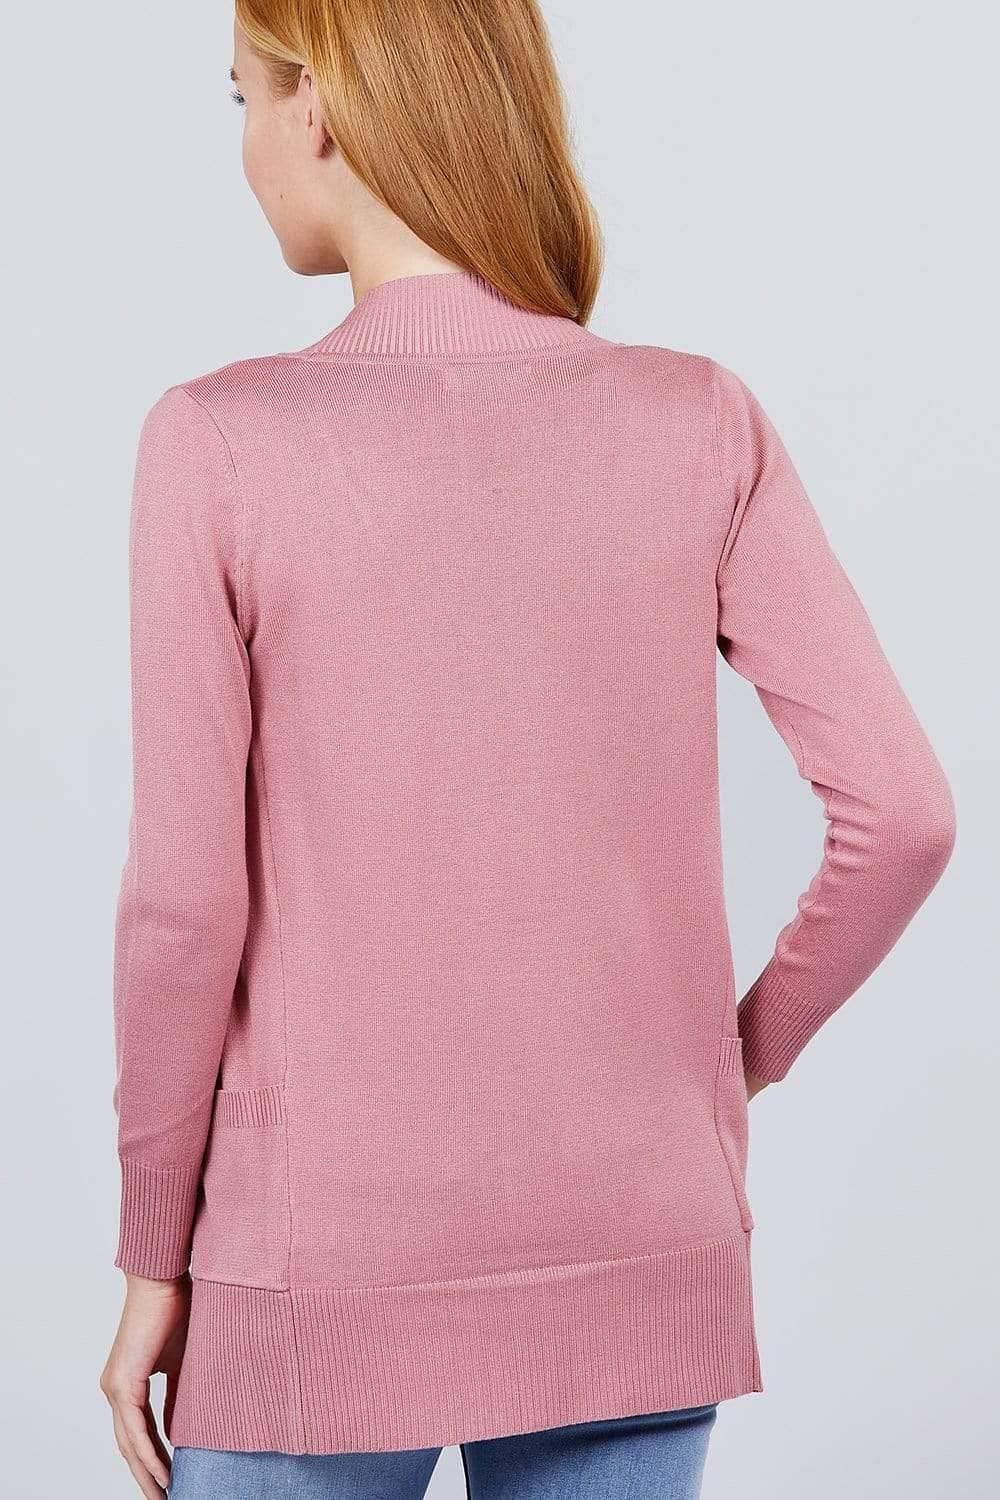 Pink Long Sleeve Open Front Rib Knit Cardigan - Shopping Therapy, LLC Cardigan